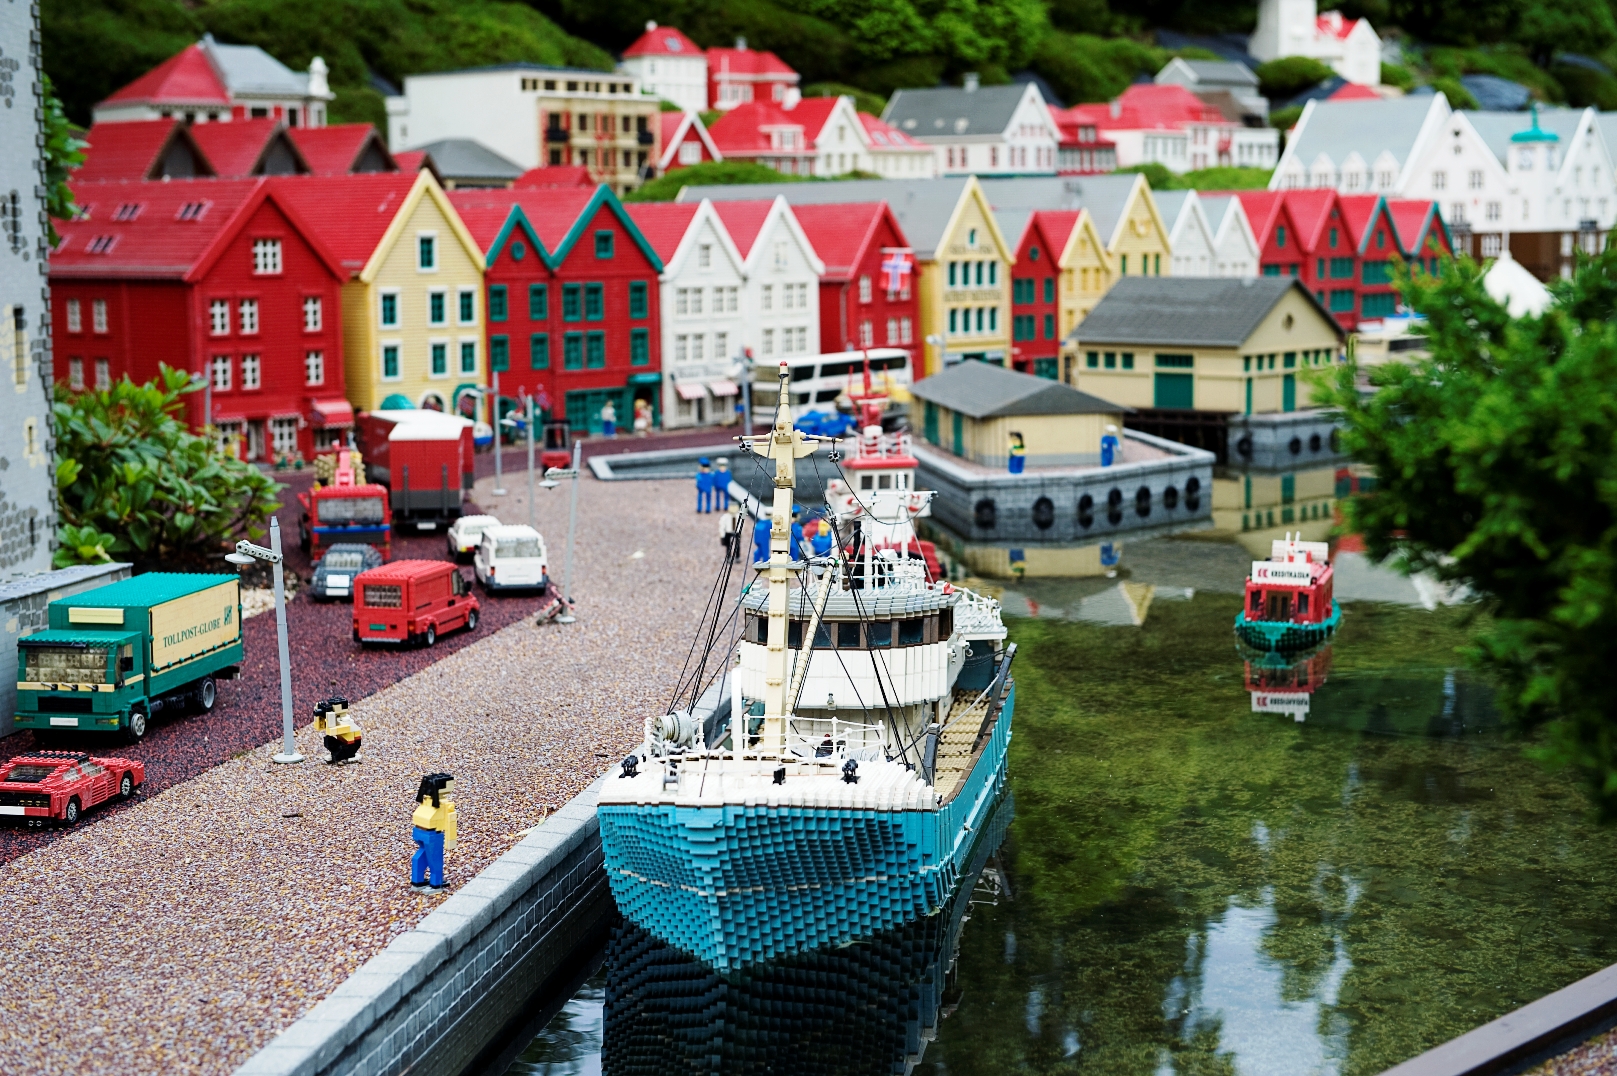 Miniland in Legoland Billund